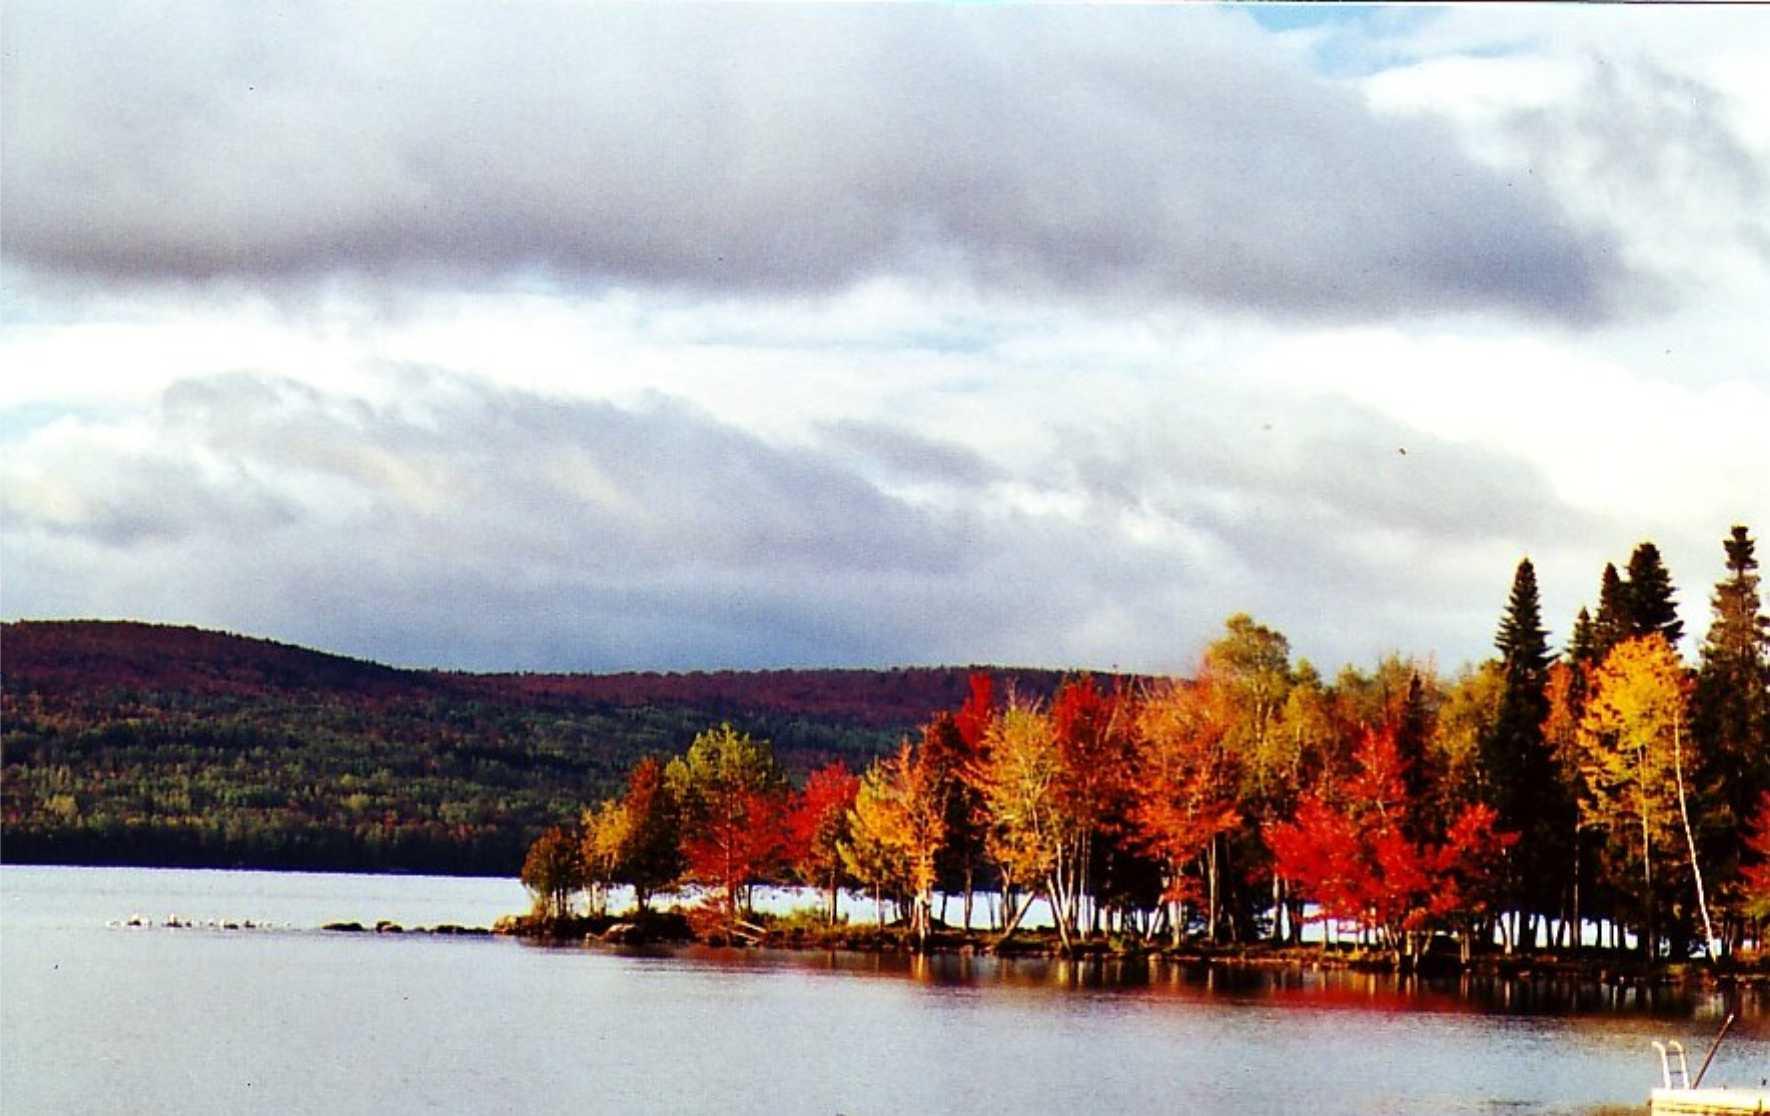 Peninsula on Rangeley Lake (user submitted)